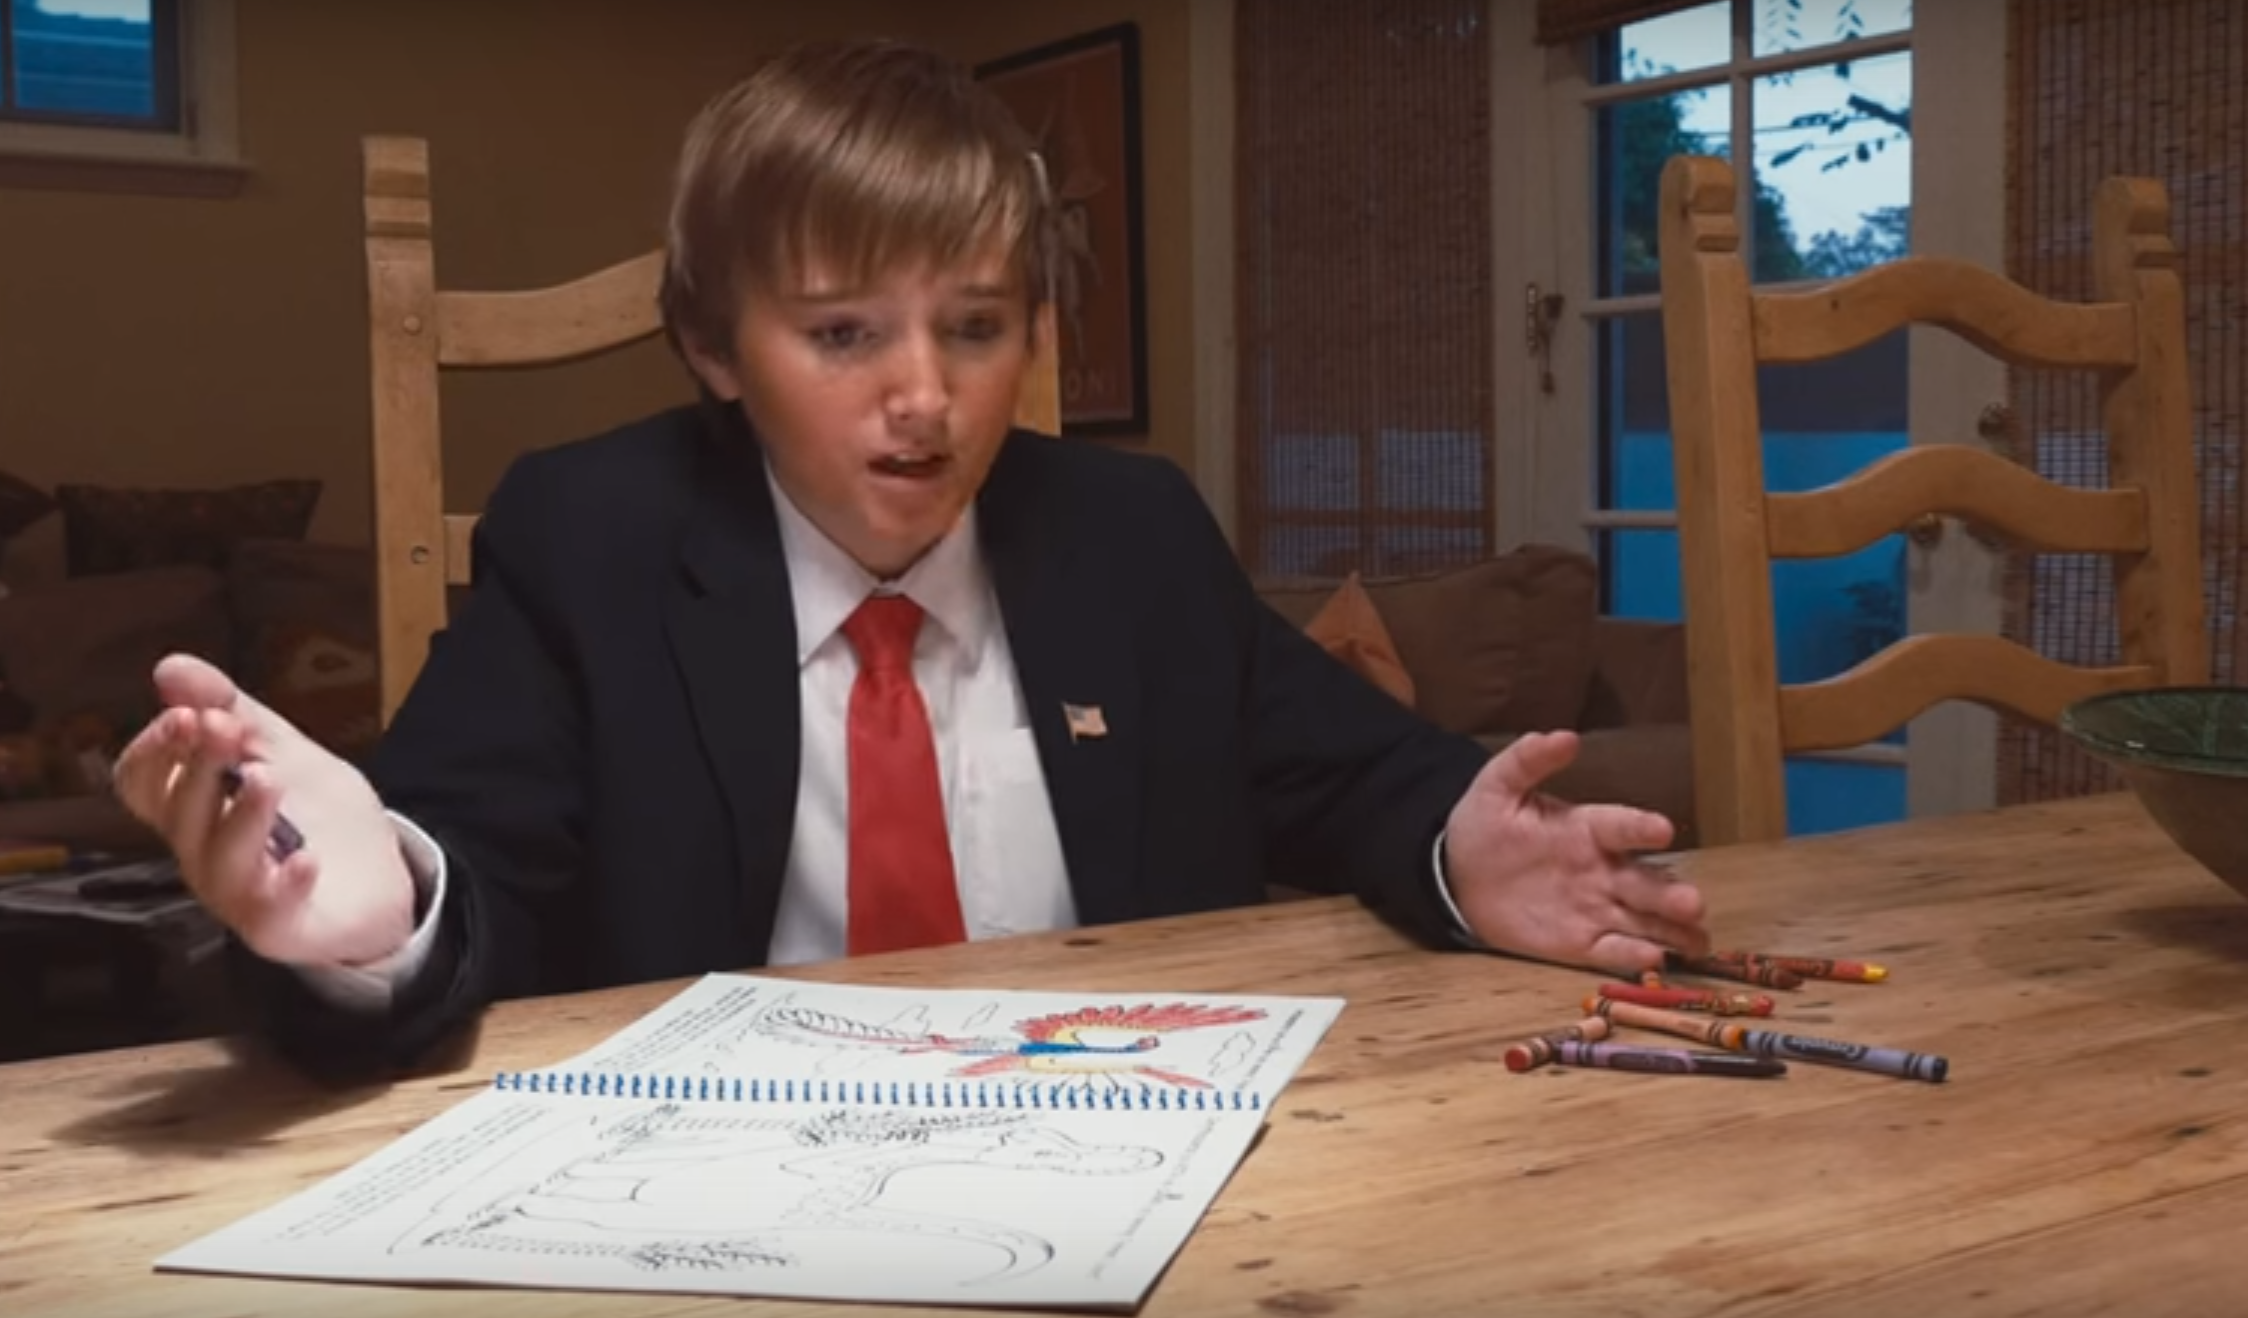 Trump Kid Runs For President In New Youtube Video